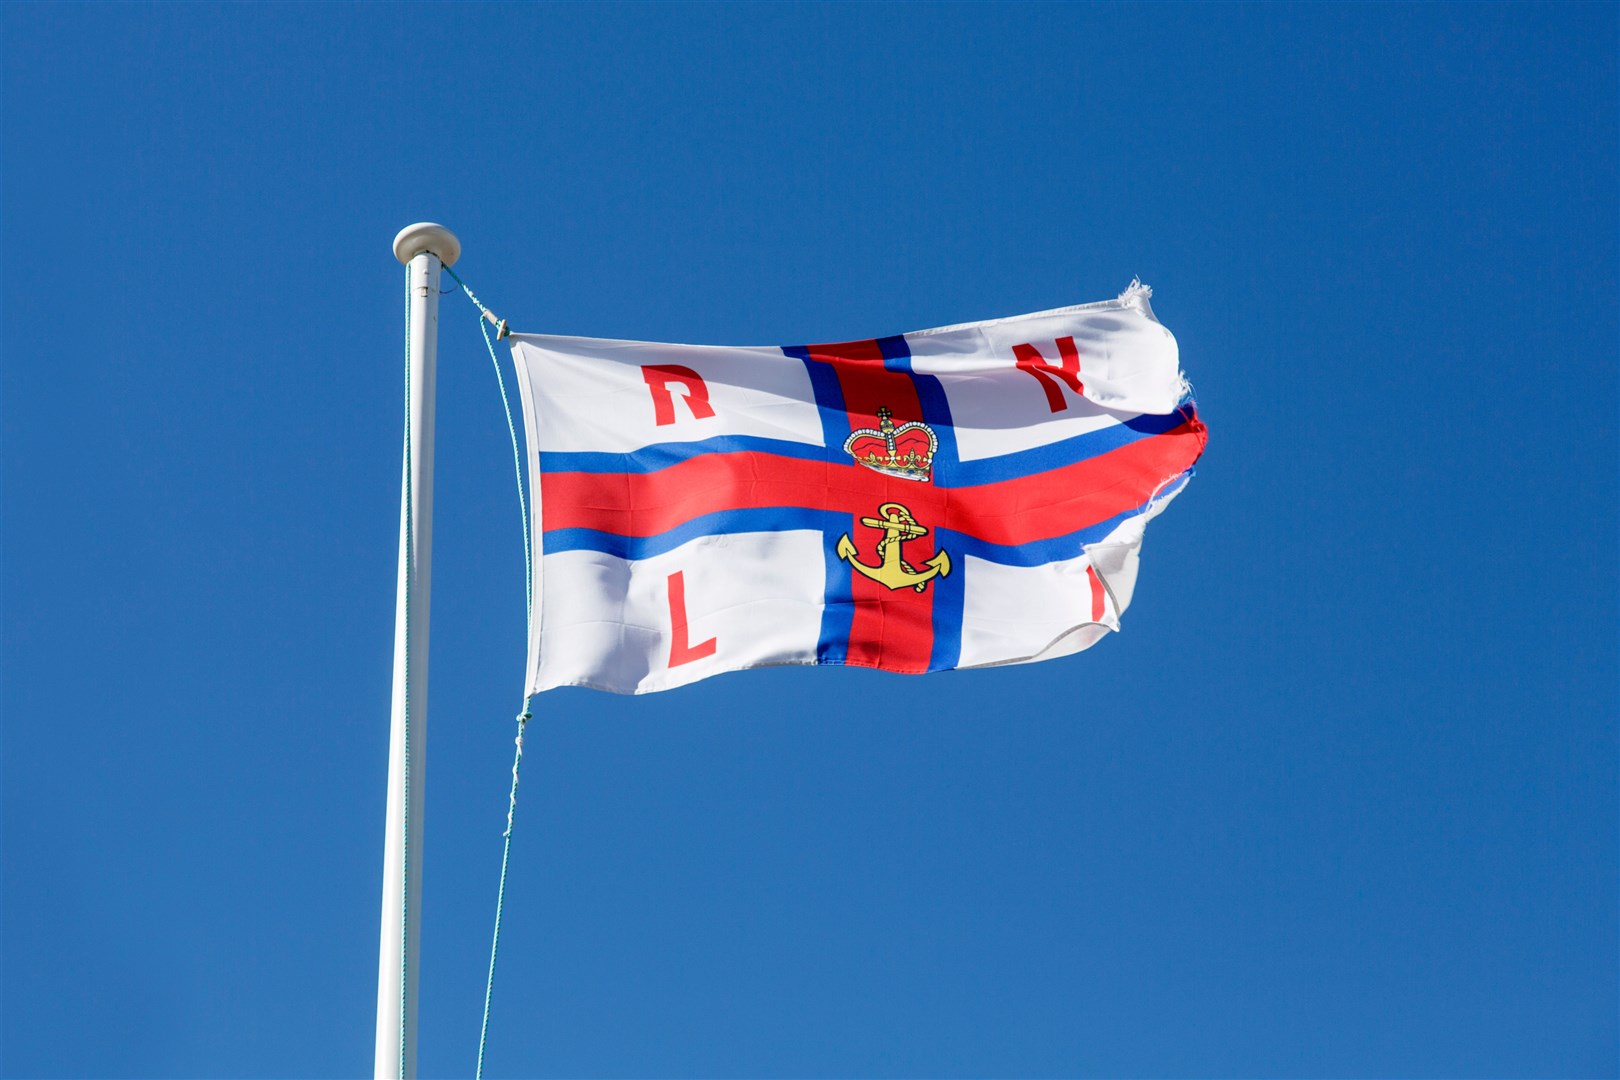 The RNLI flag.